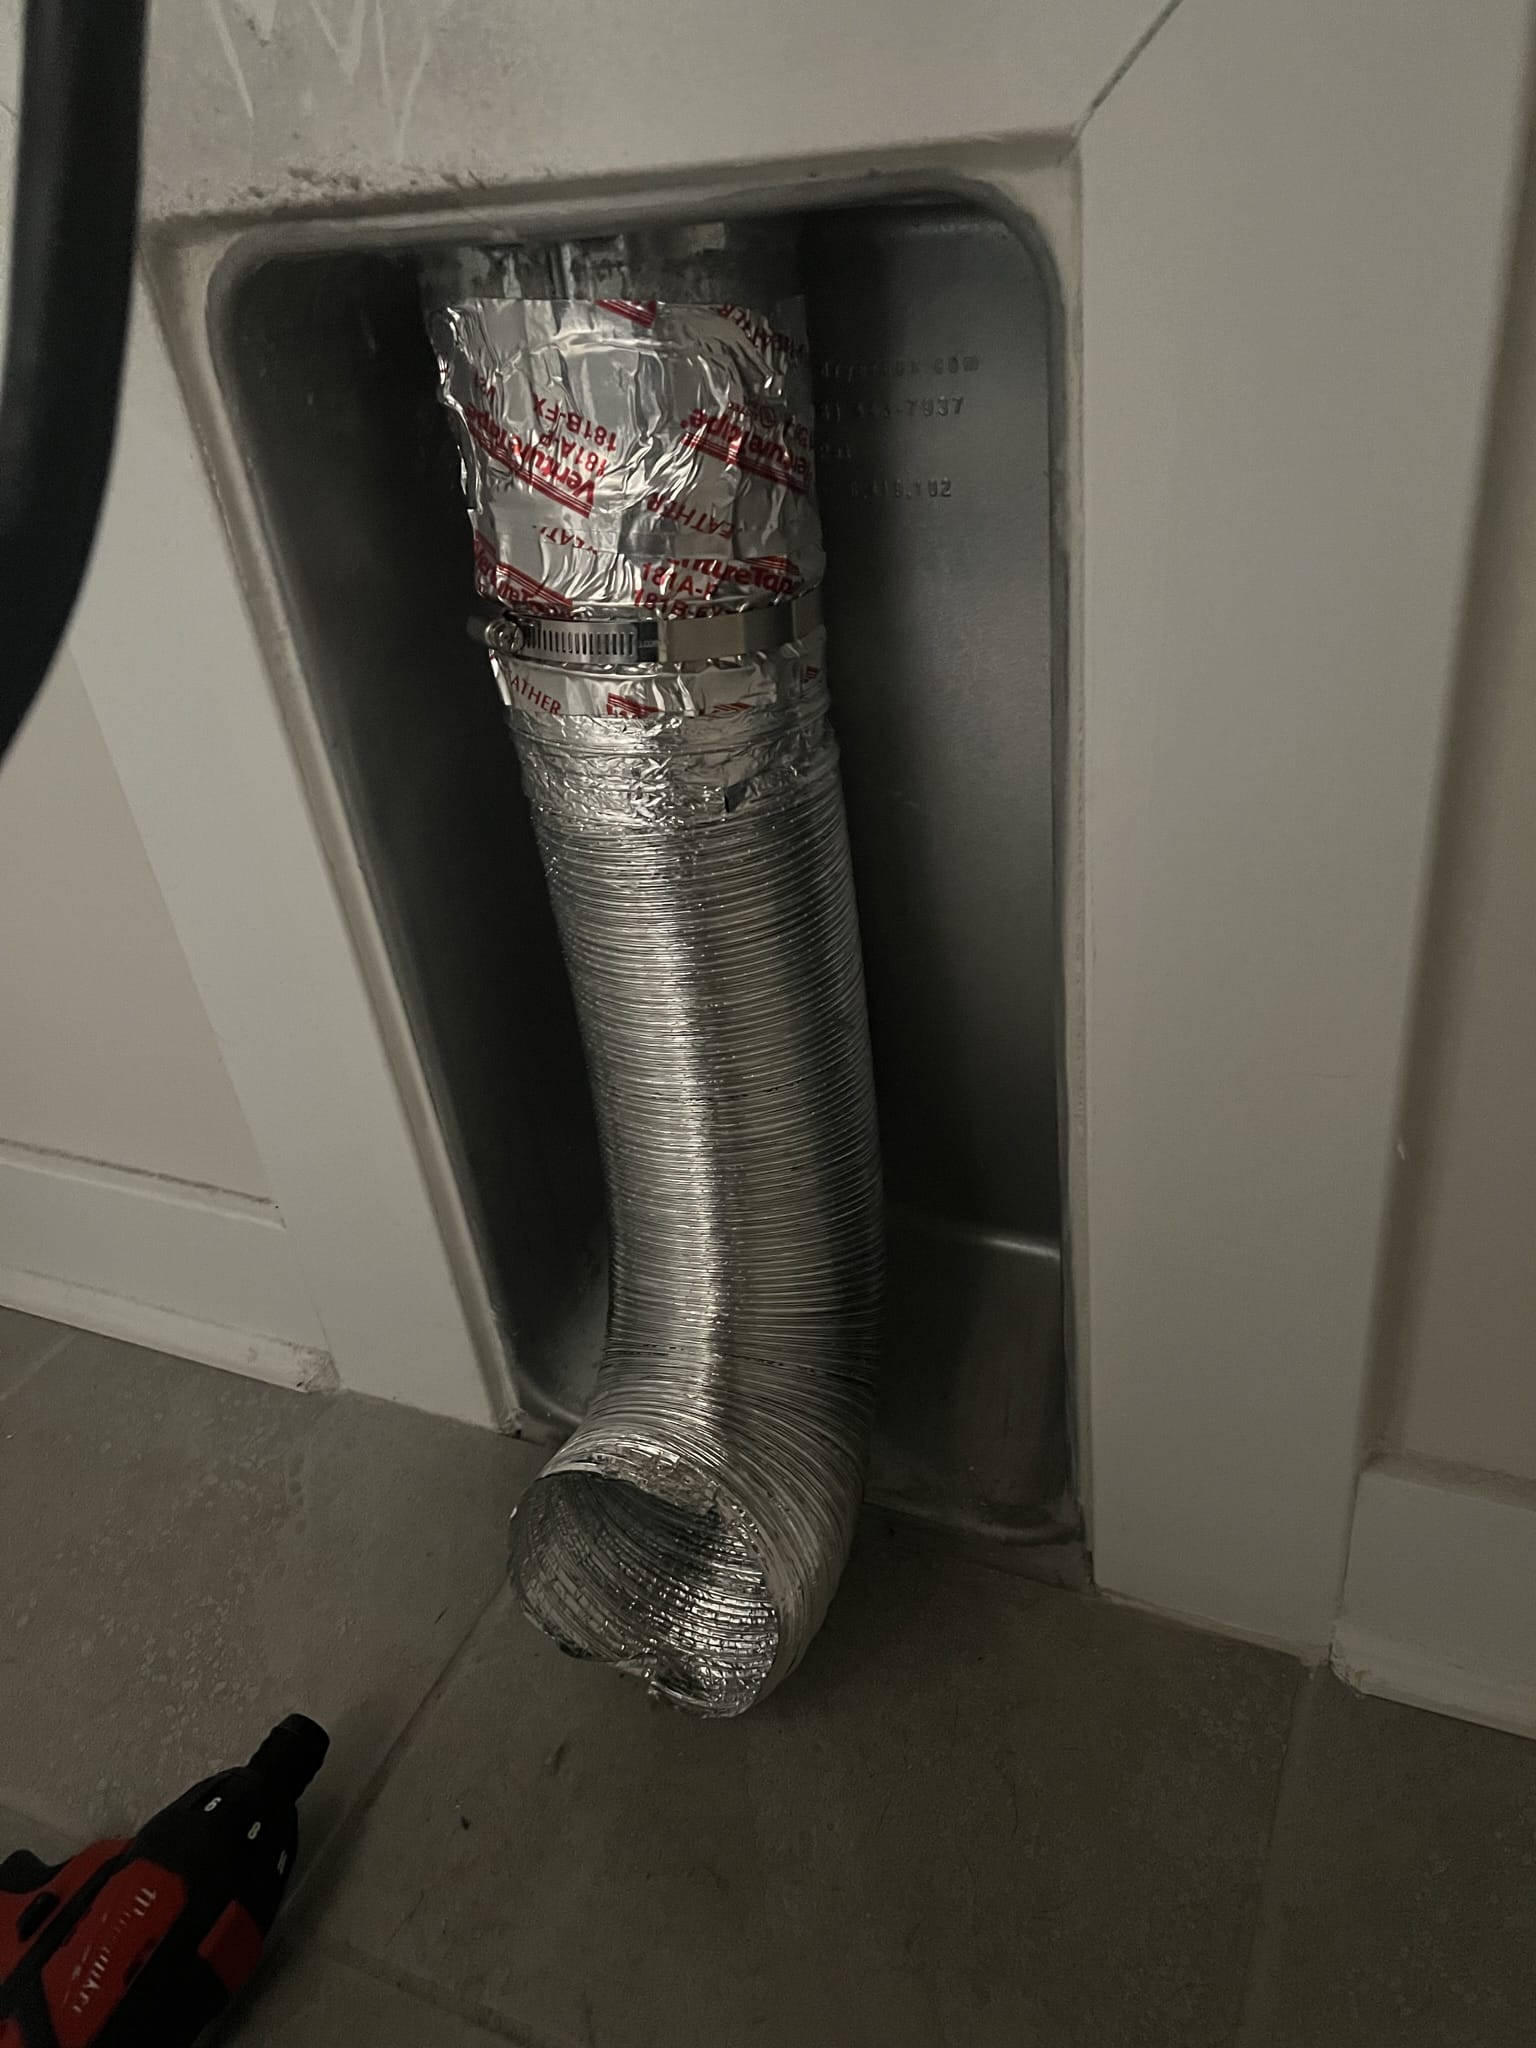 roxbury dryer vent repair near me